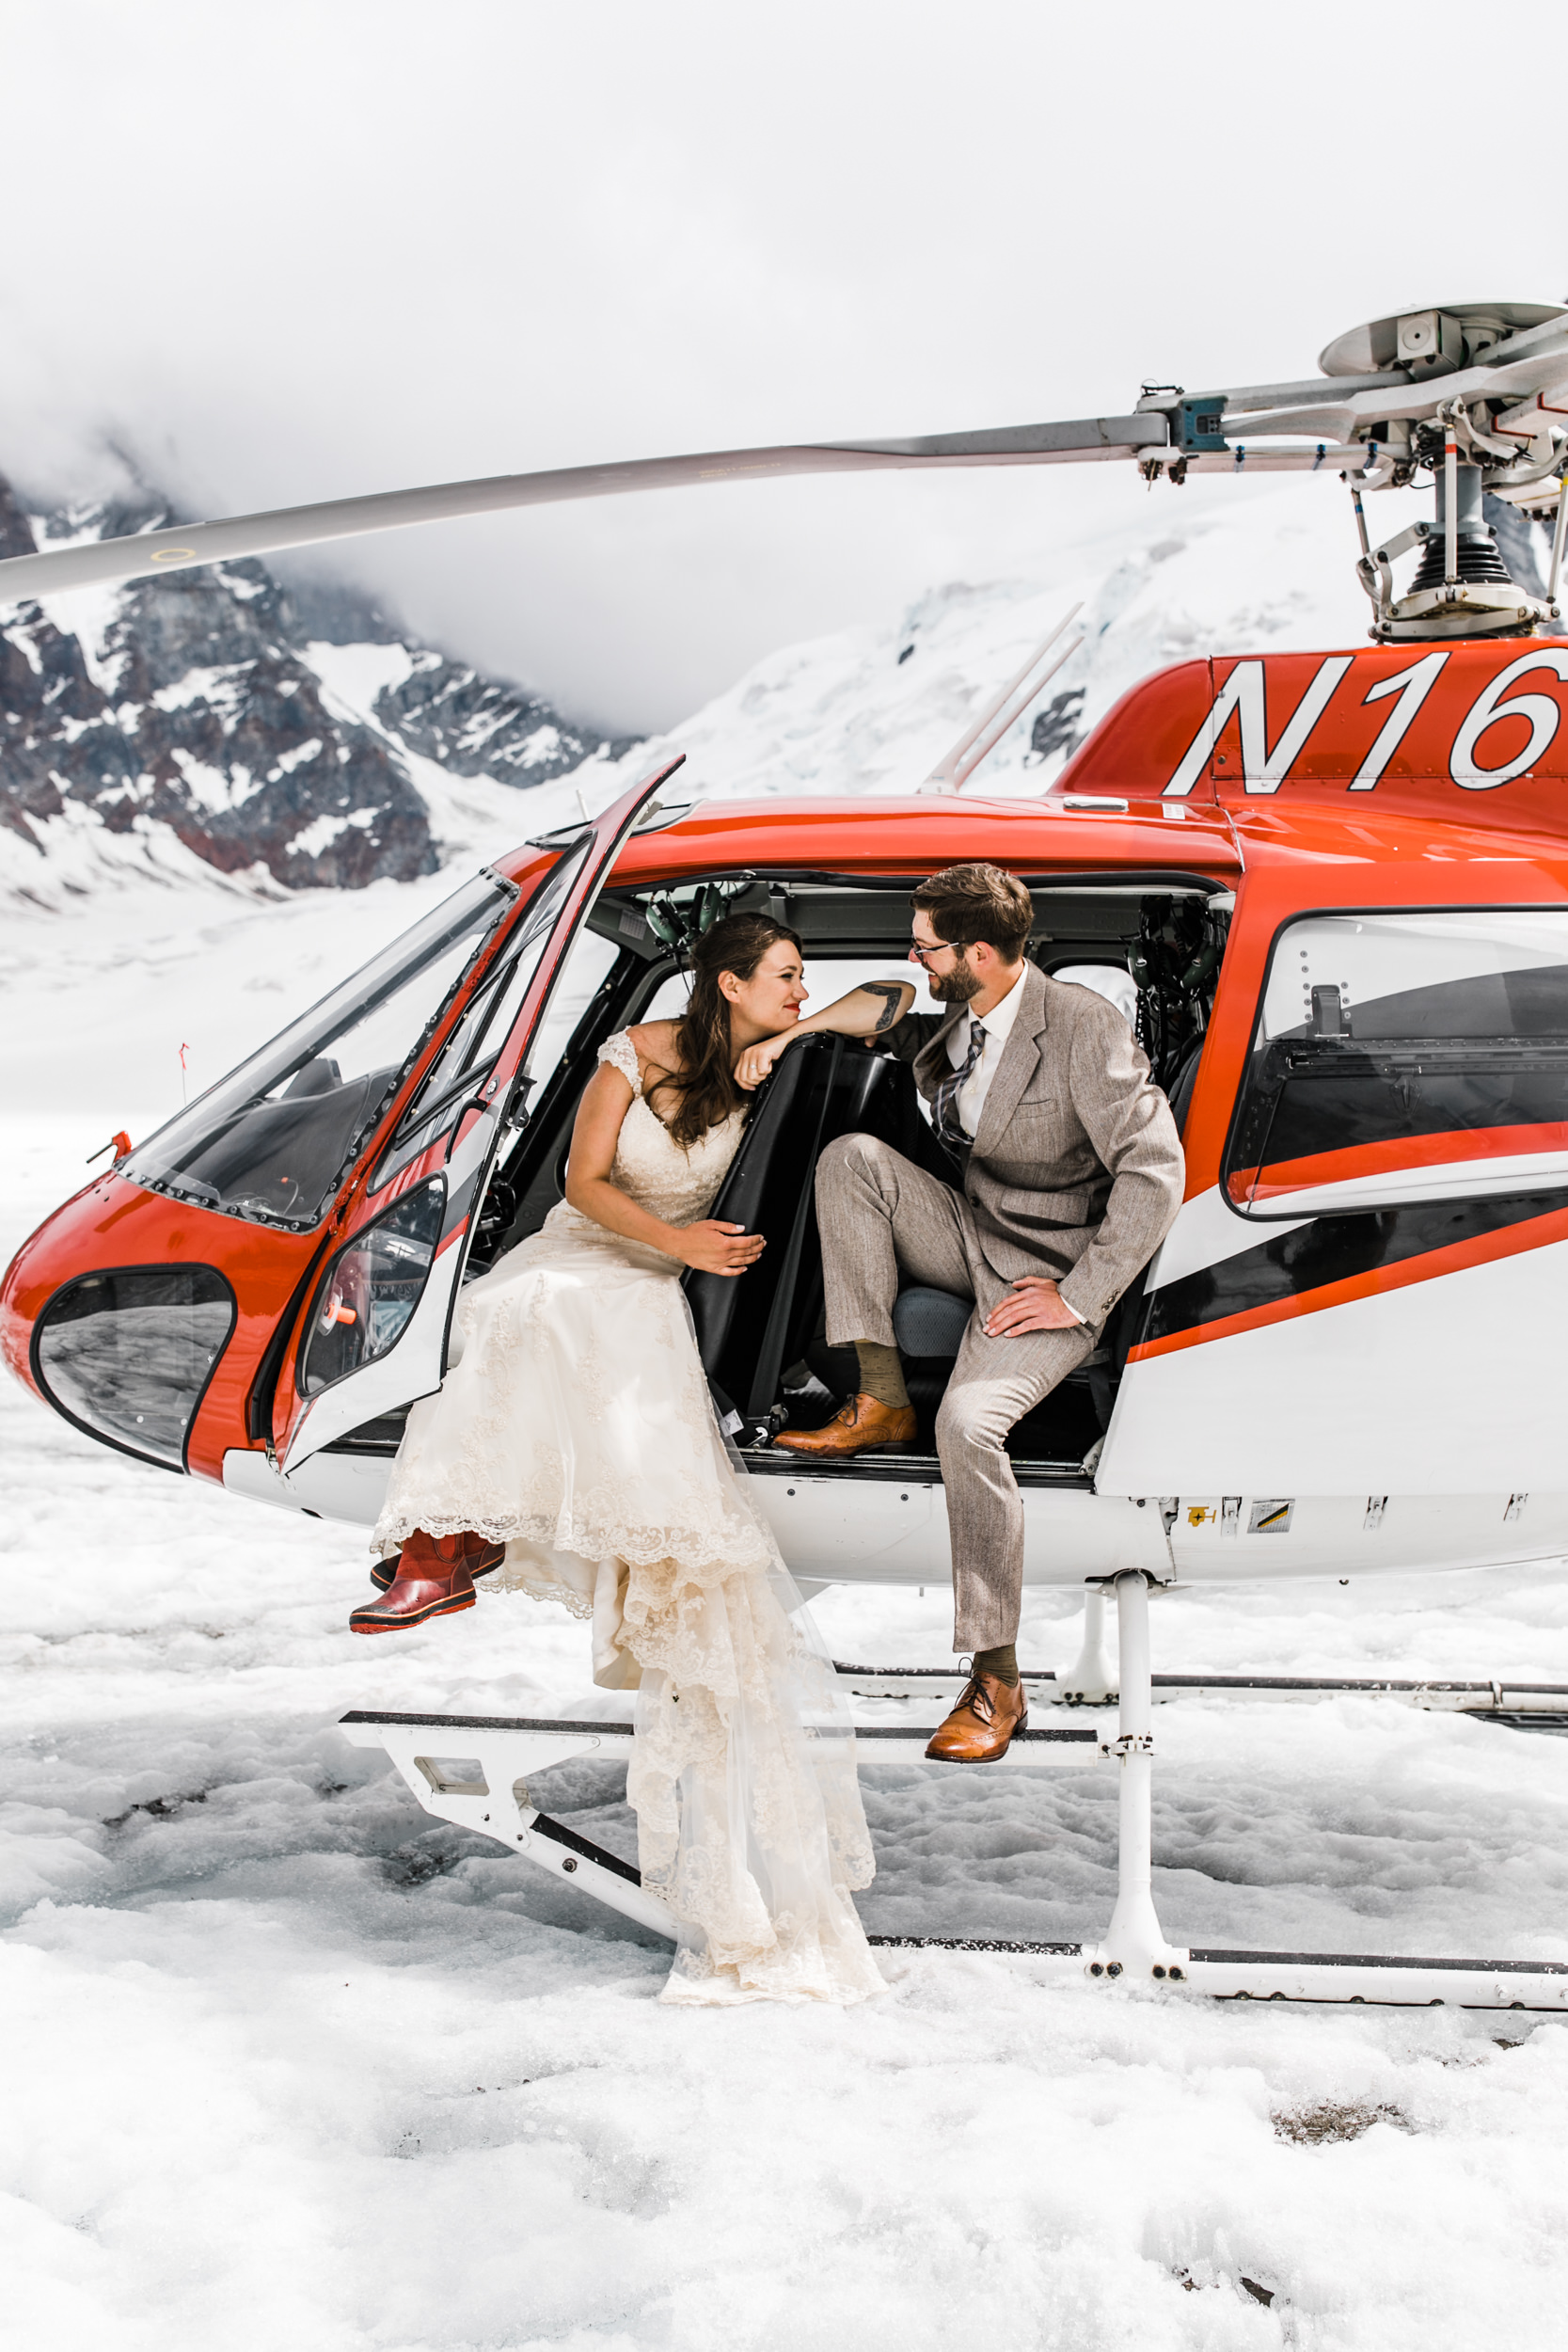 helicopter flightseeing tour in denali national park | alaska destination elopement inspiration | heli wedding in alaska | the hearnes adventure photography | www.thehearnes.com